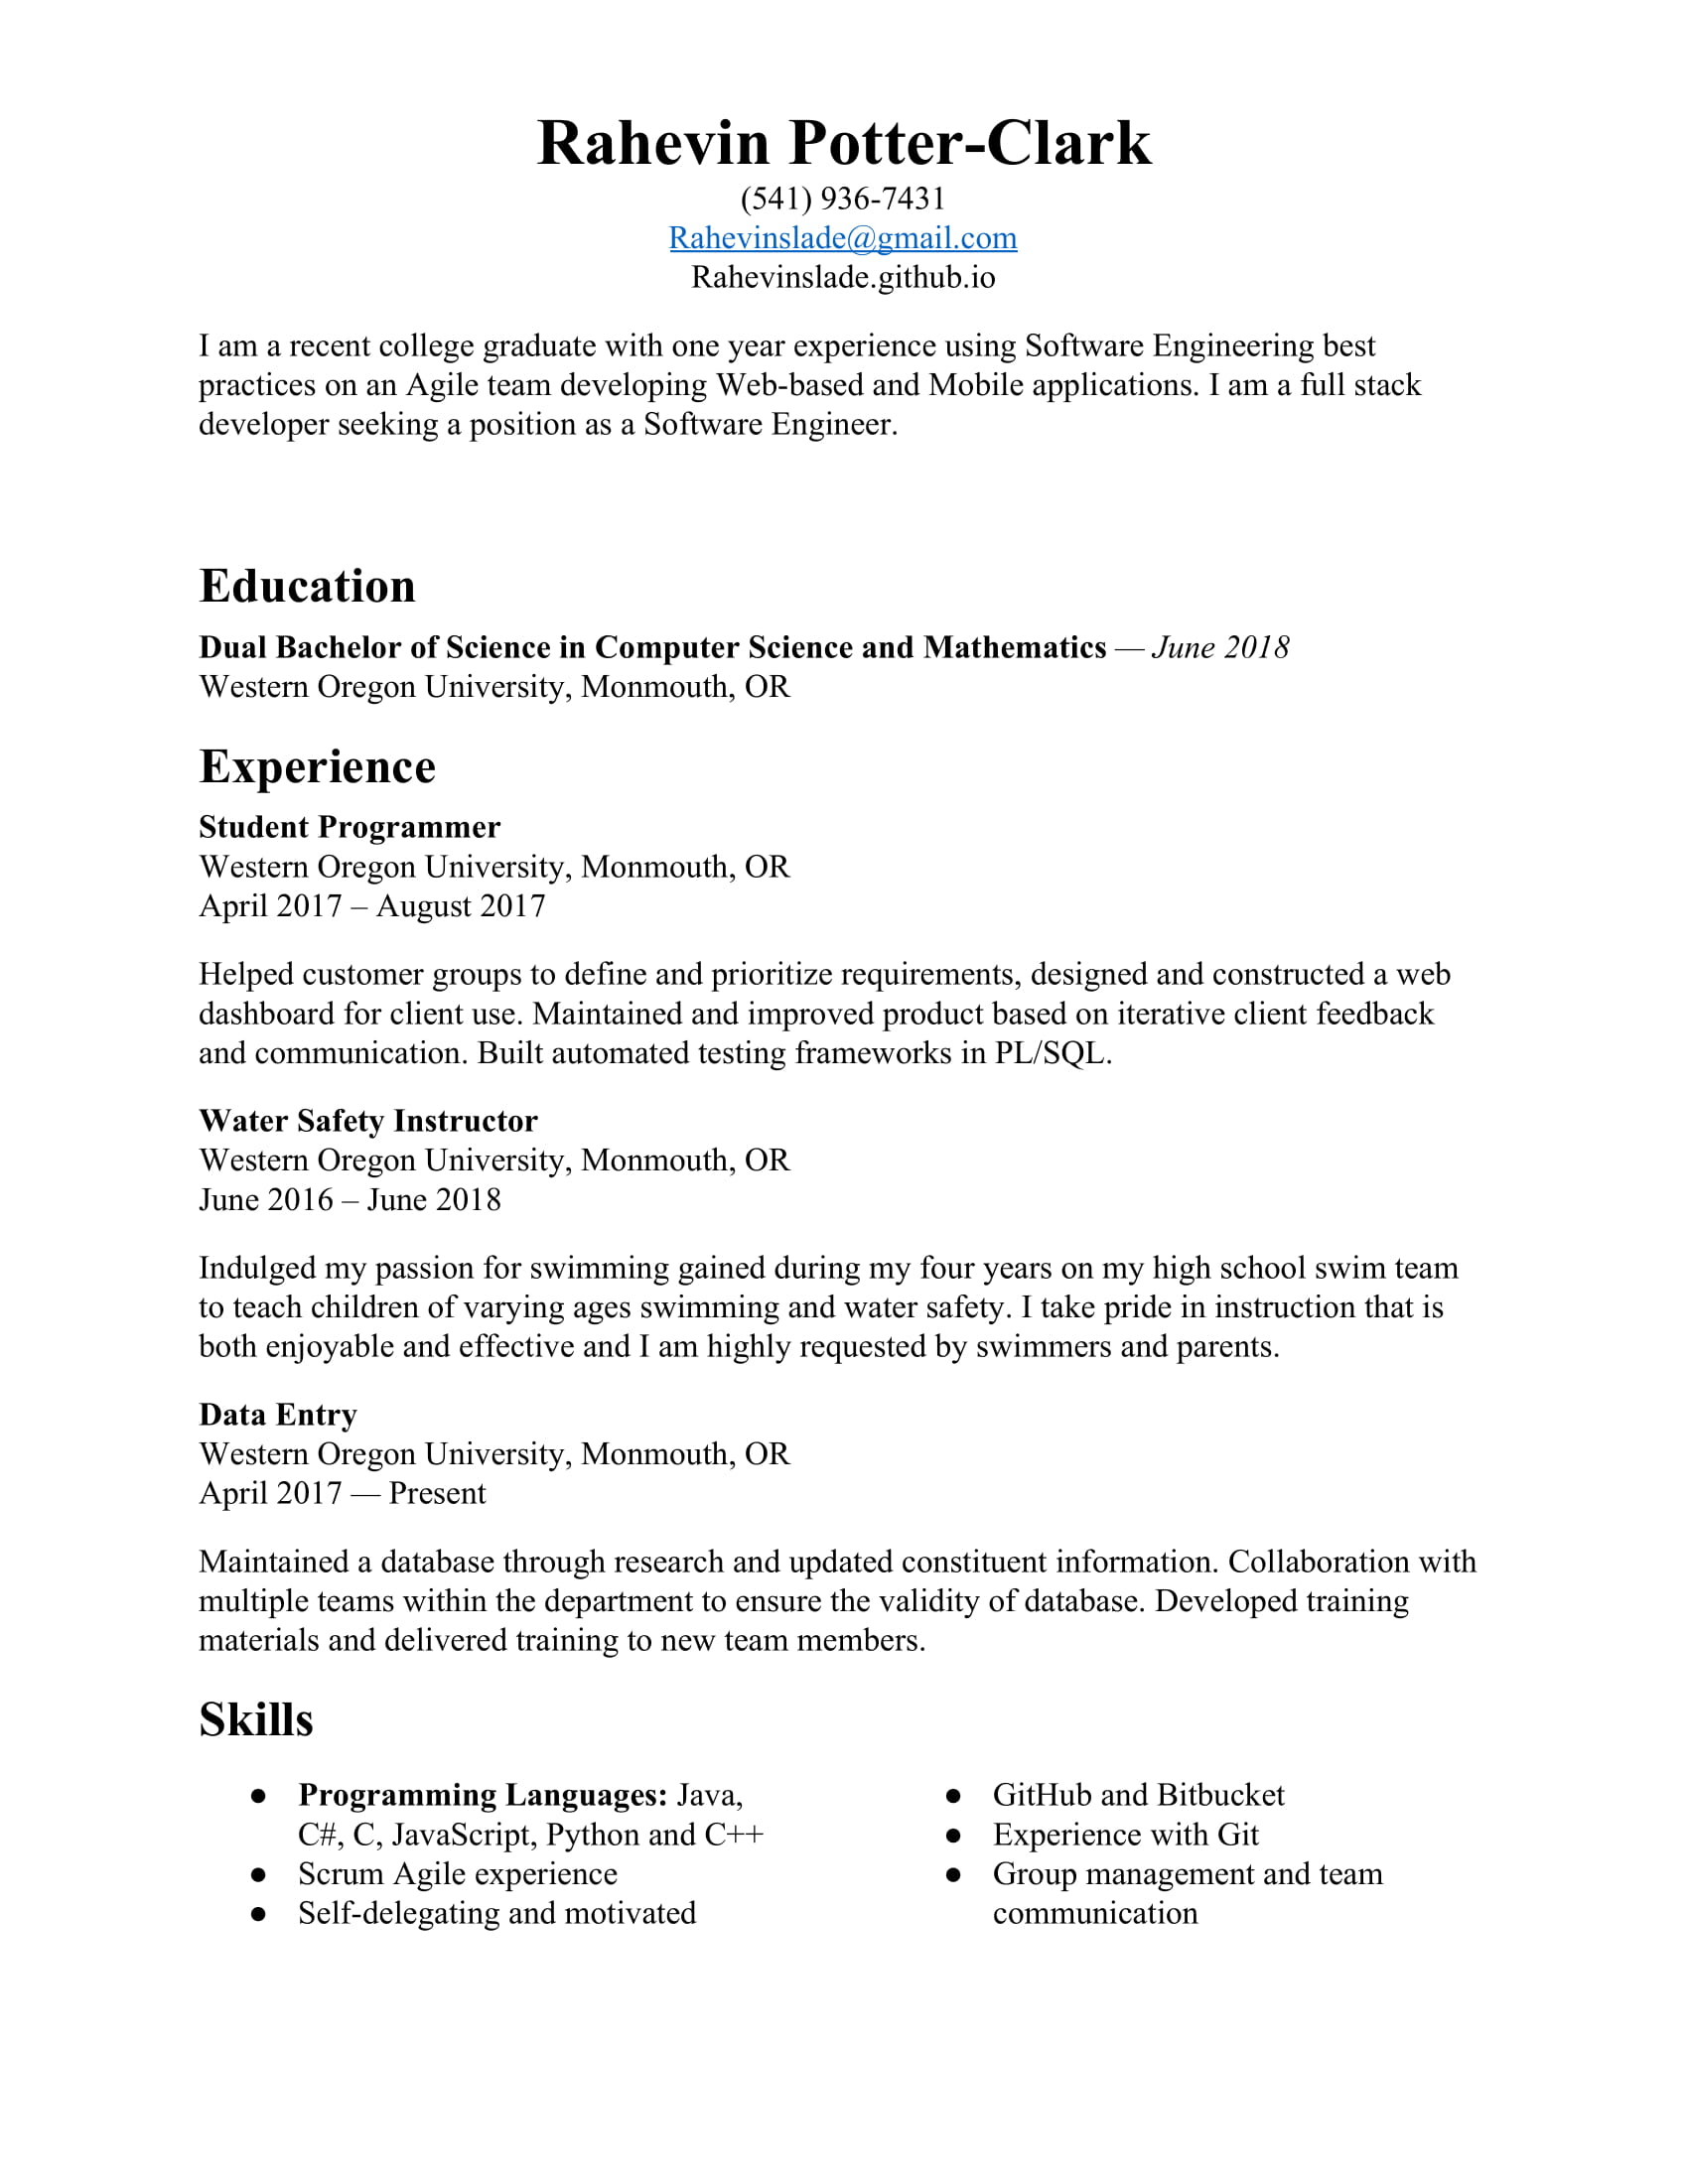 Rahevin's Resume